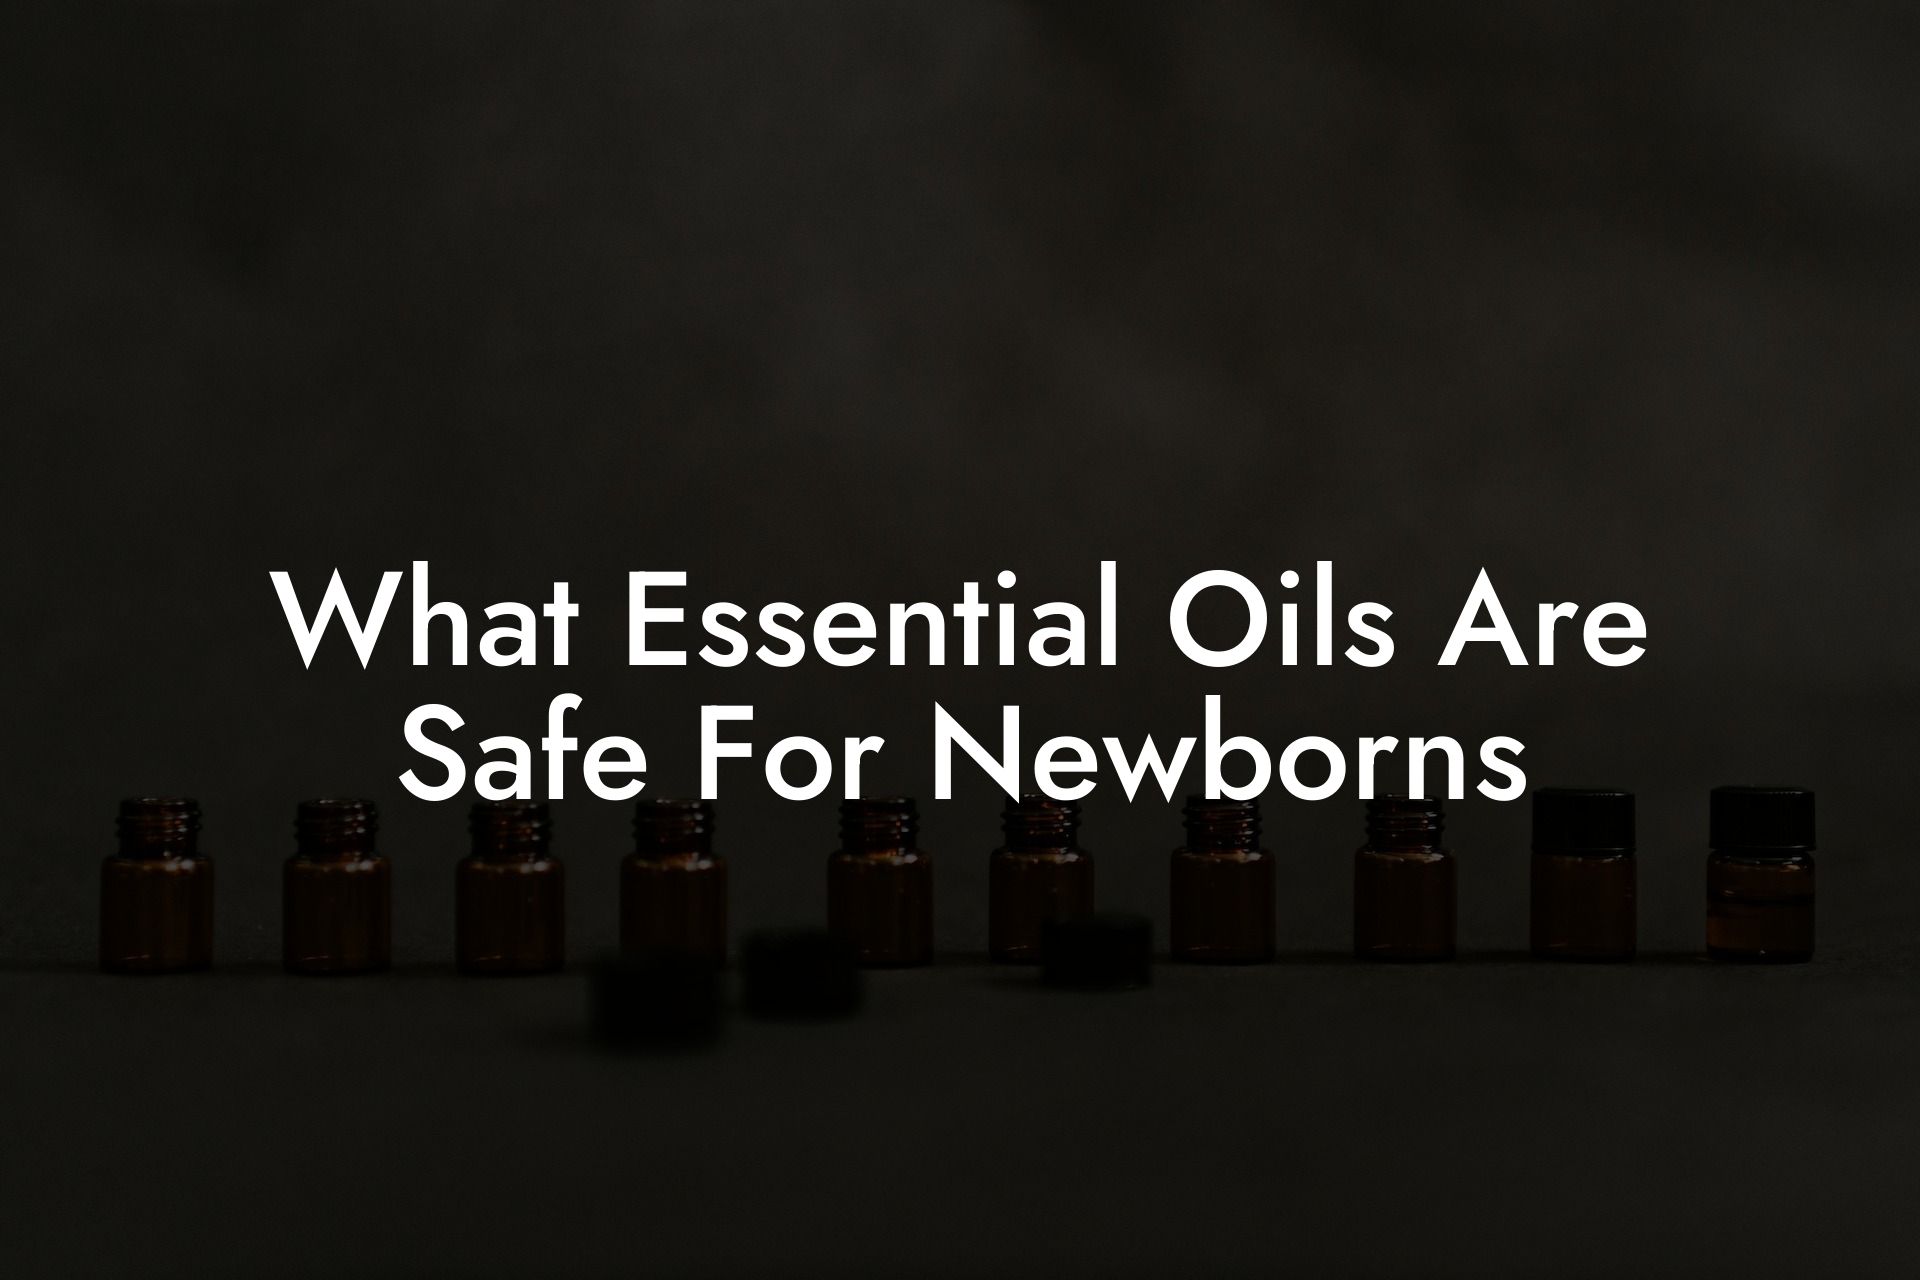 What Essential Oils Are Safe For Newborns